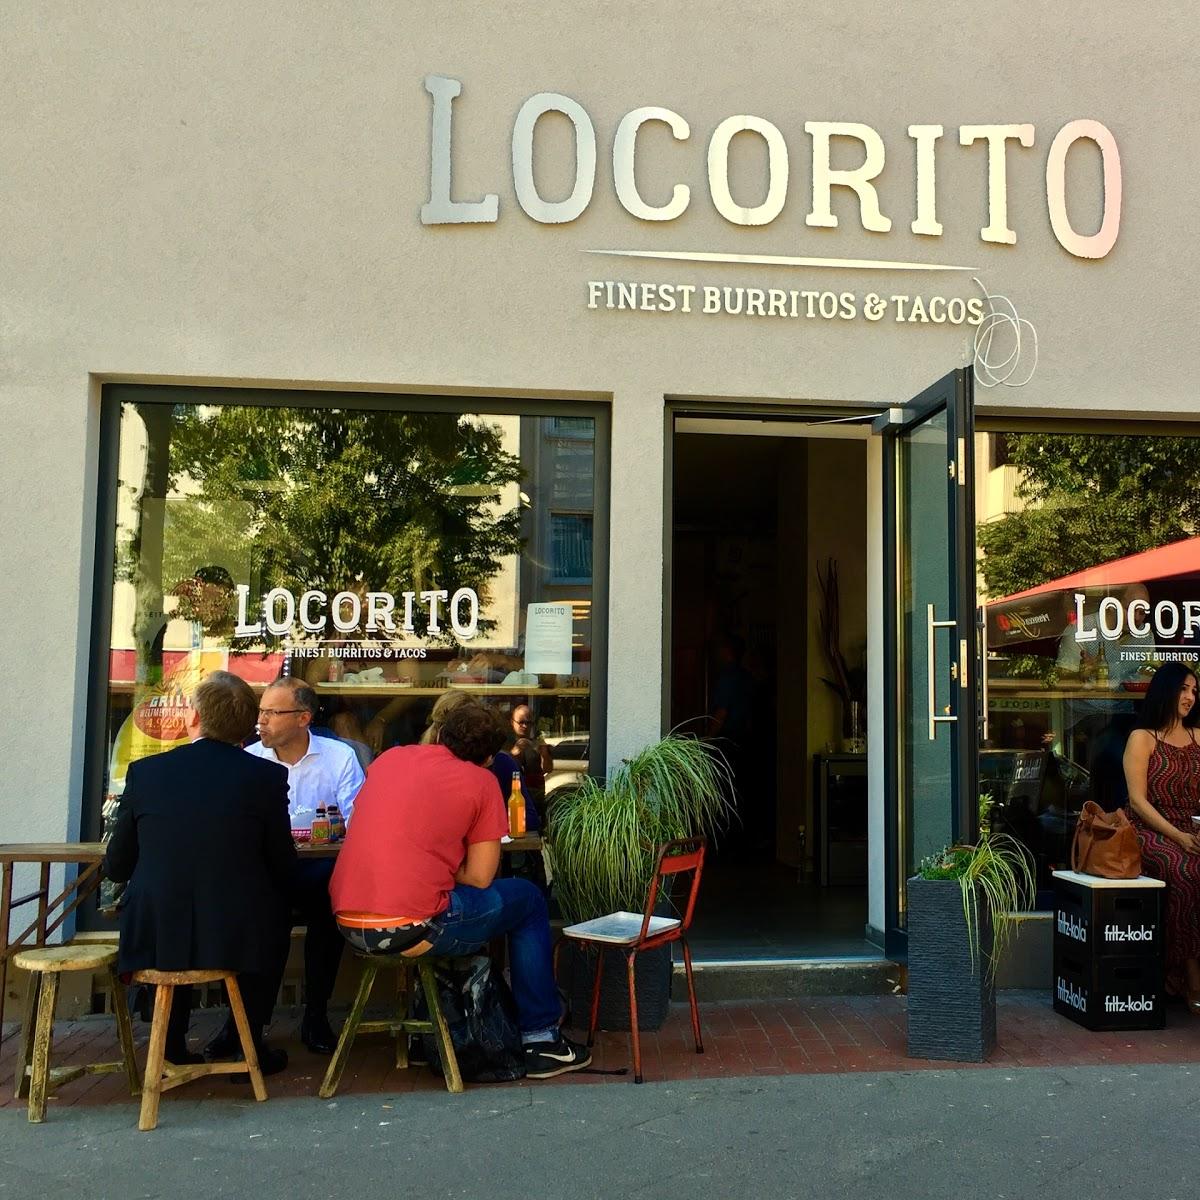 Restaurant "Locorito" in Hannover